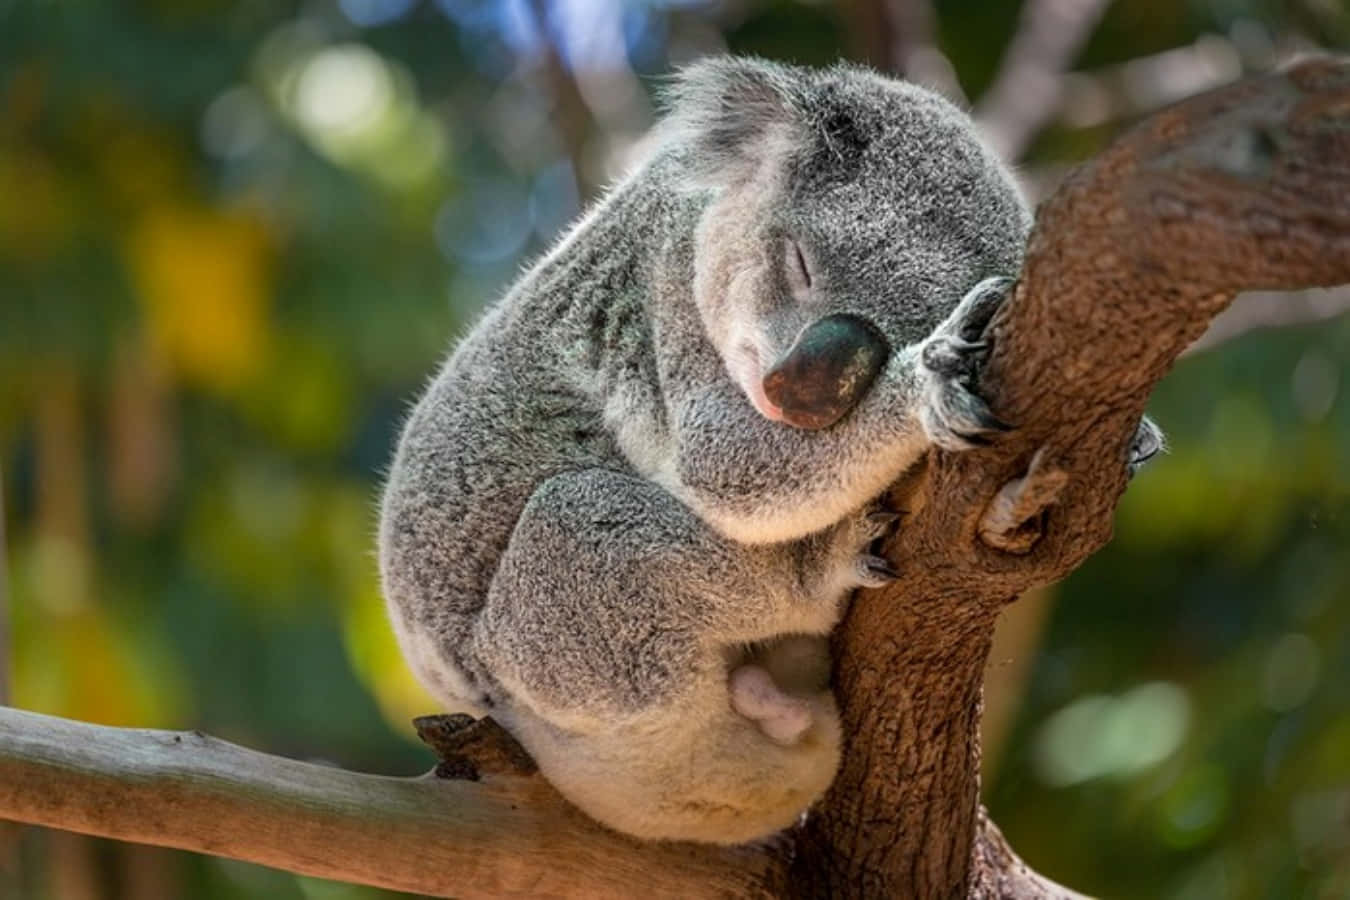 A close-up of a Koala Bear